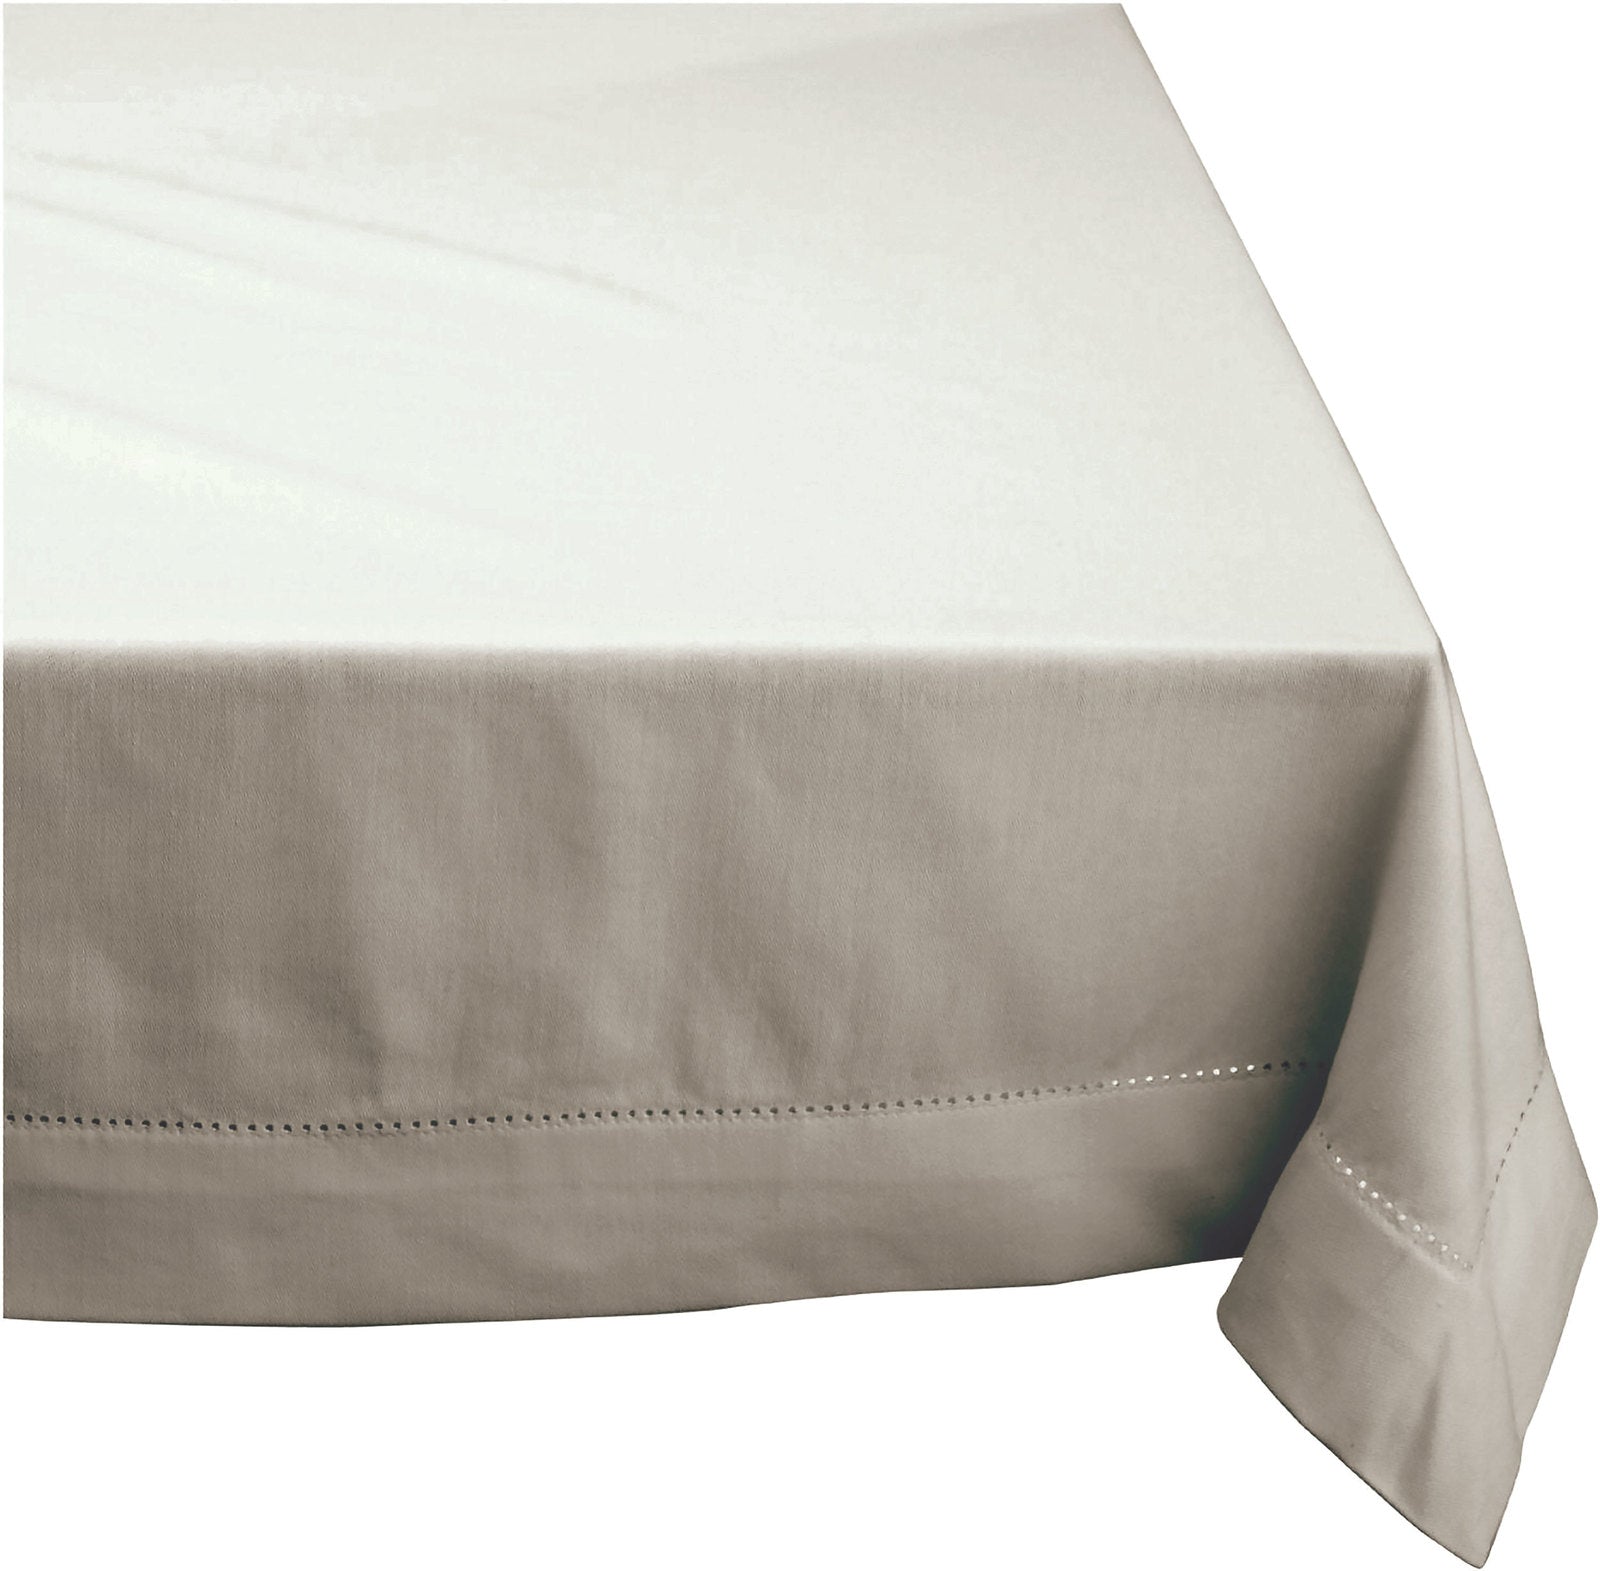 Elegant Hemstitch Tablecloth - 100% Cotton - 150x260cm in Oatmeal